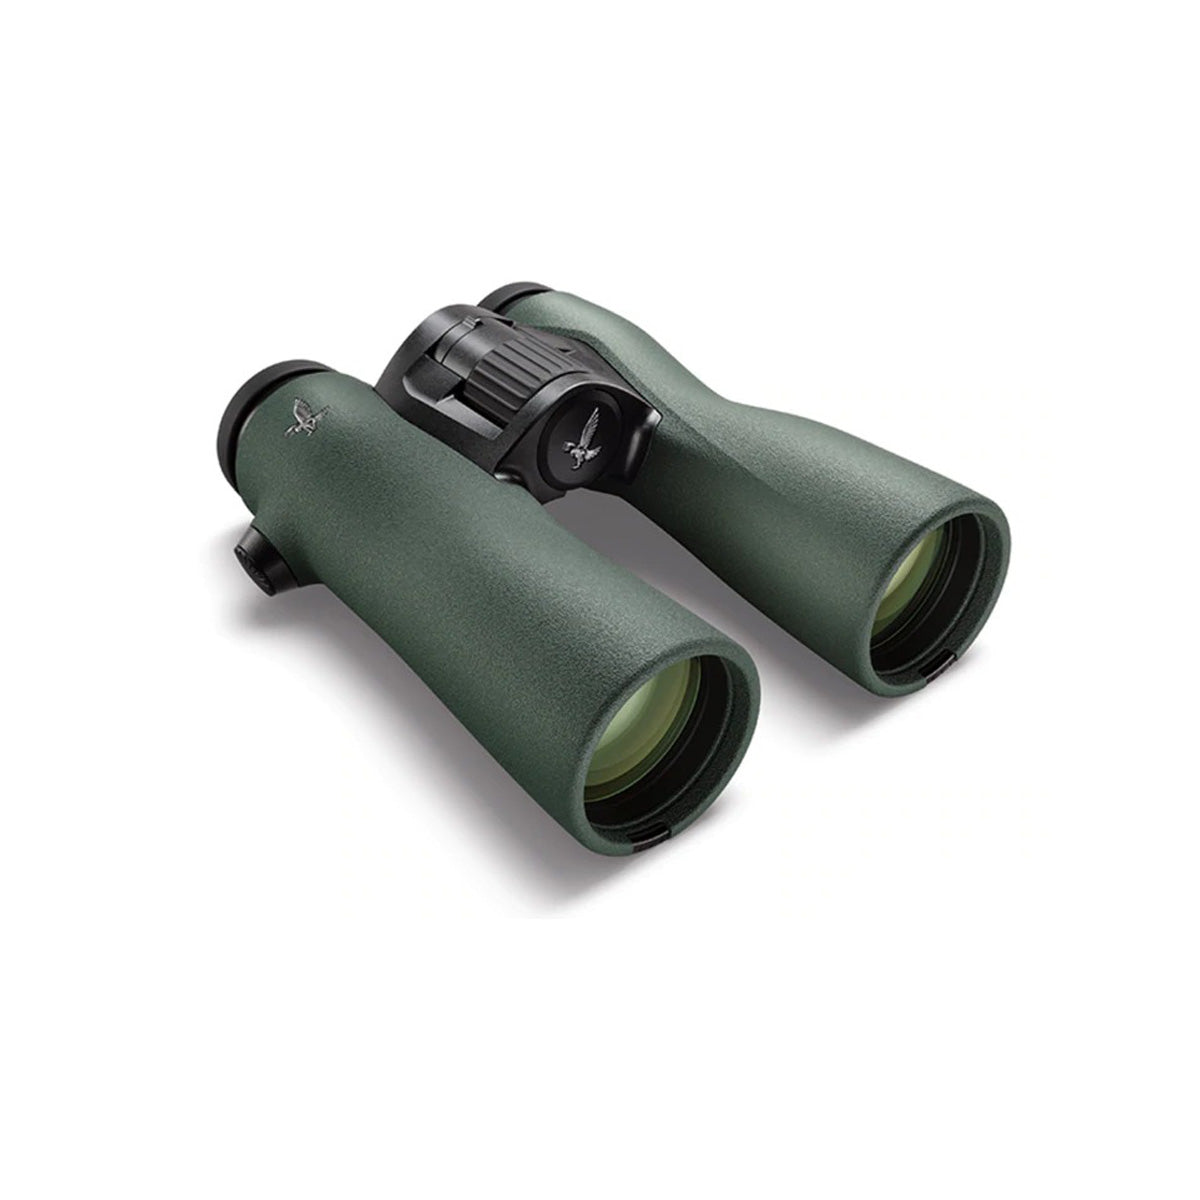 Green NL PURE Swarovski Binocular 12 power 42 mm Objective